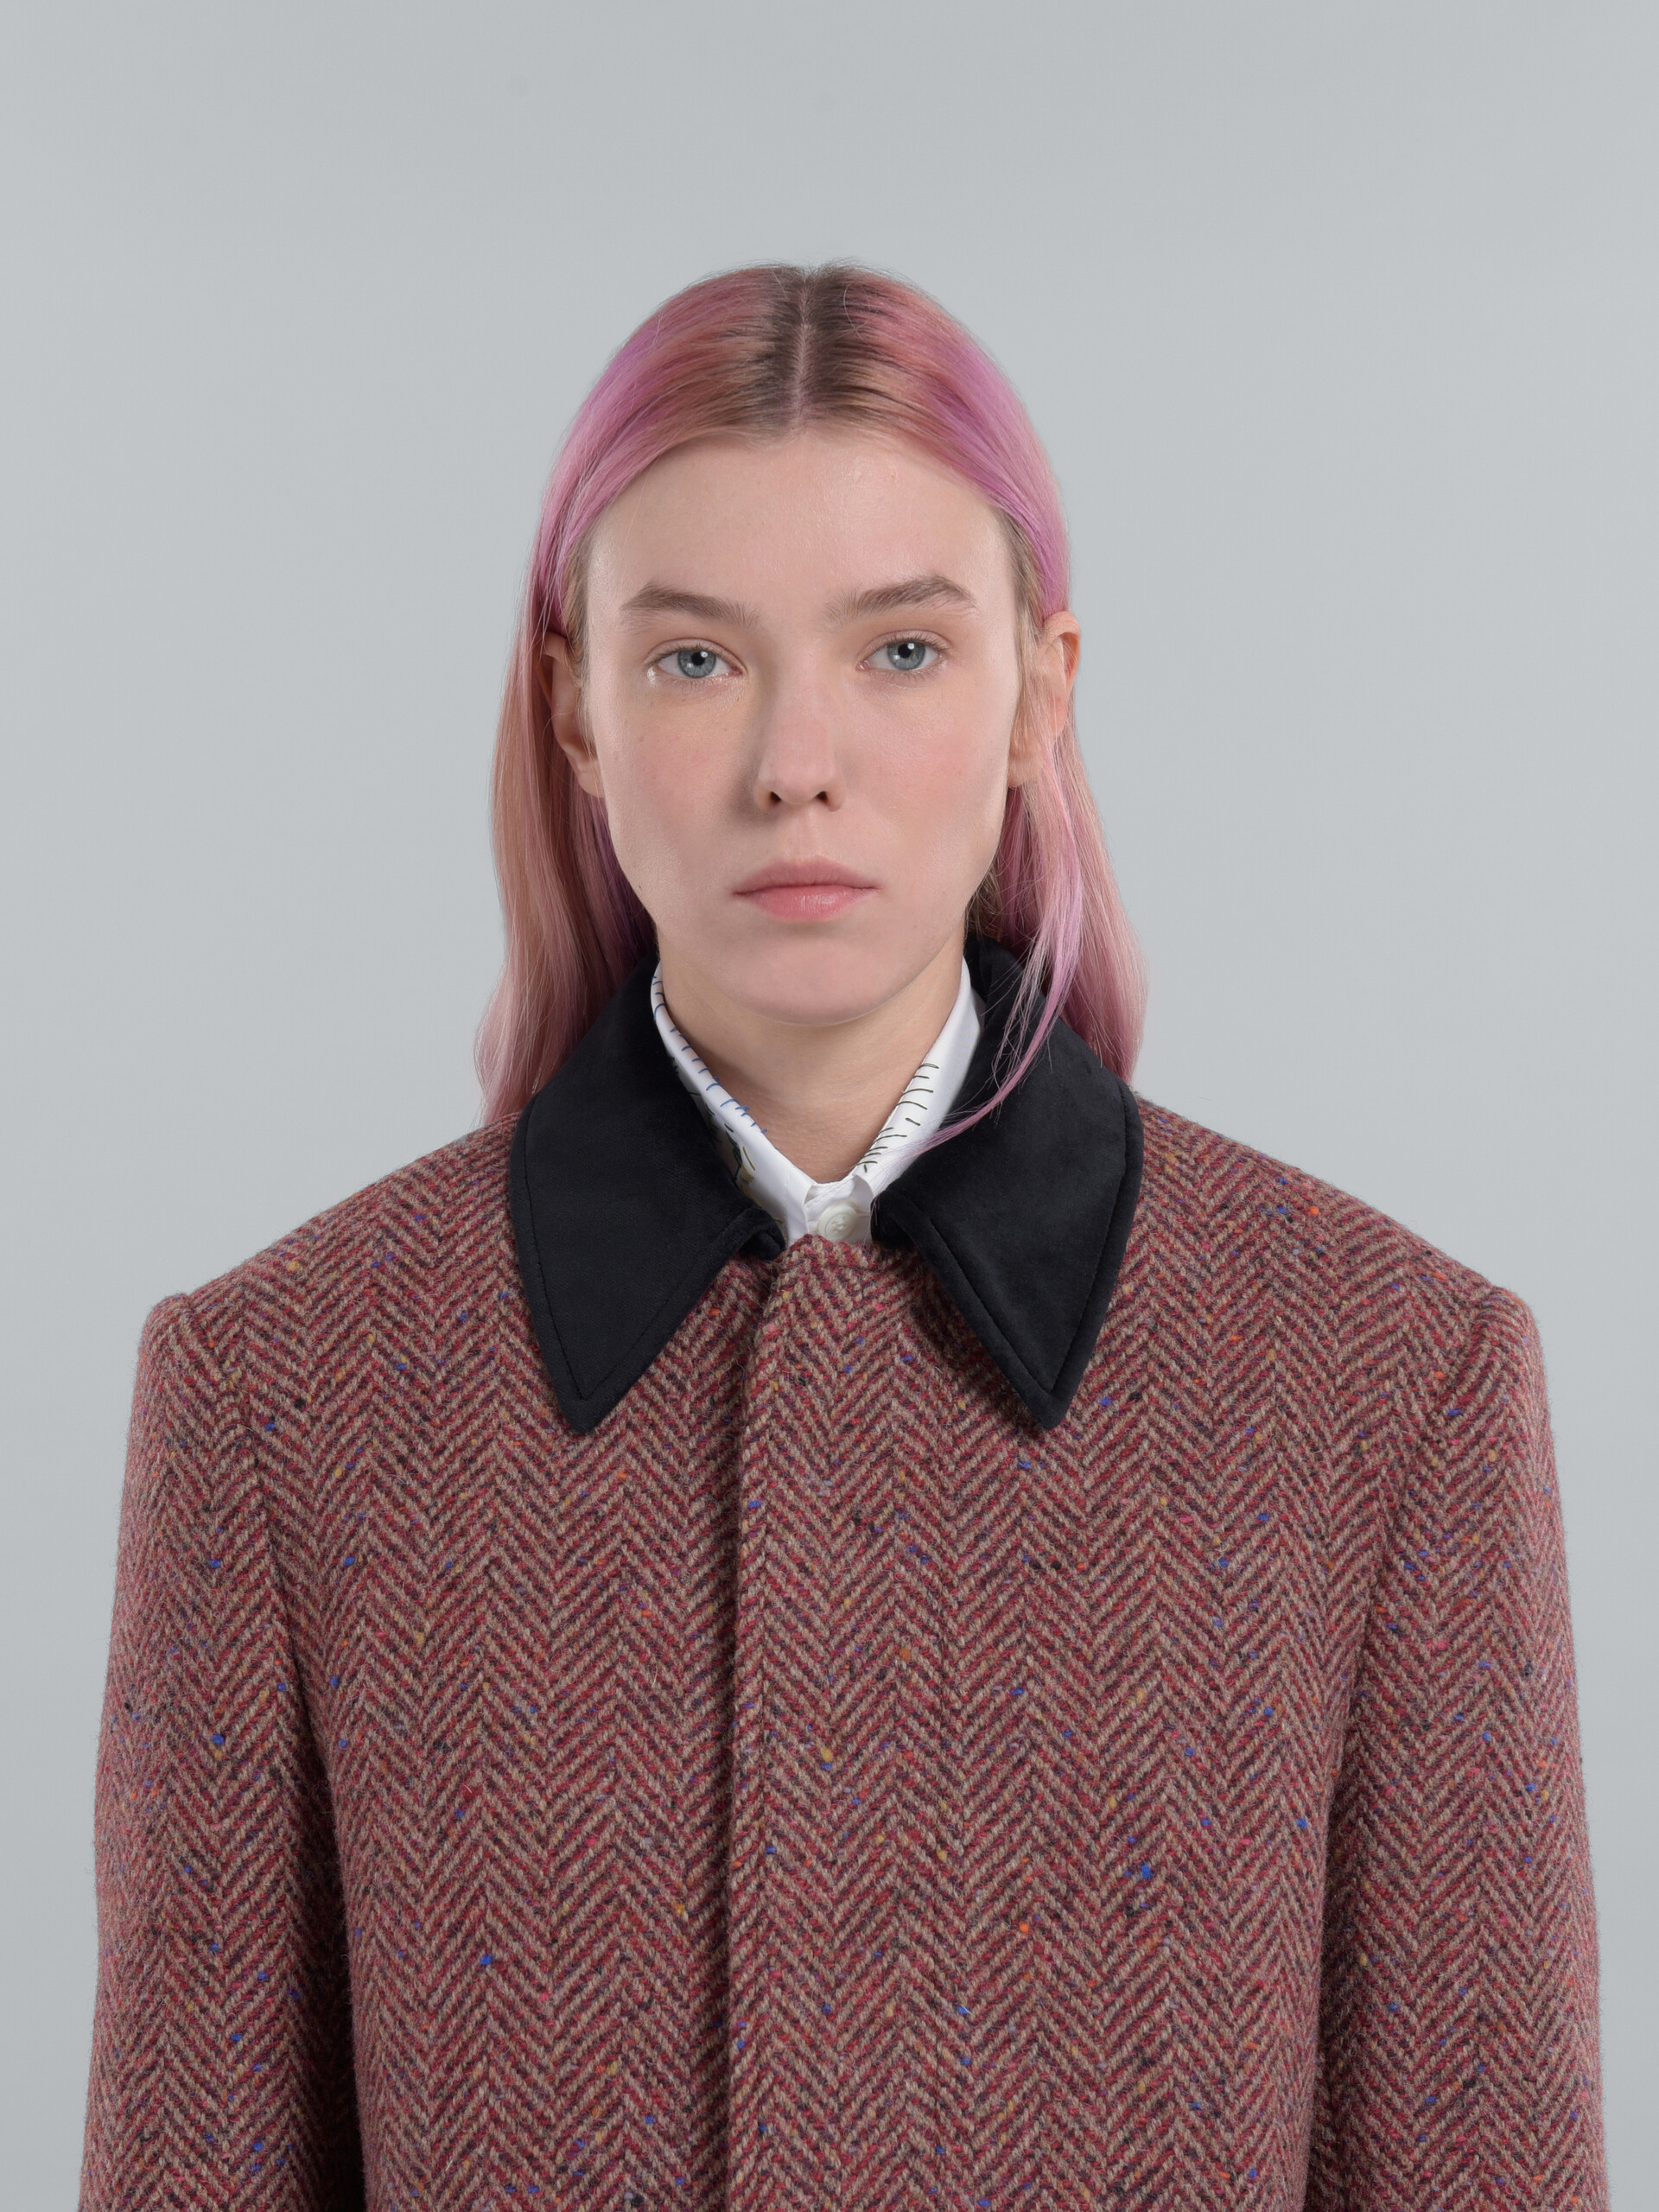 Burgundy chevron wool coat with velvet collar - Coat - Image 4